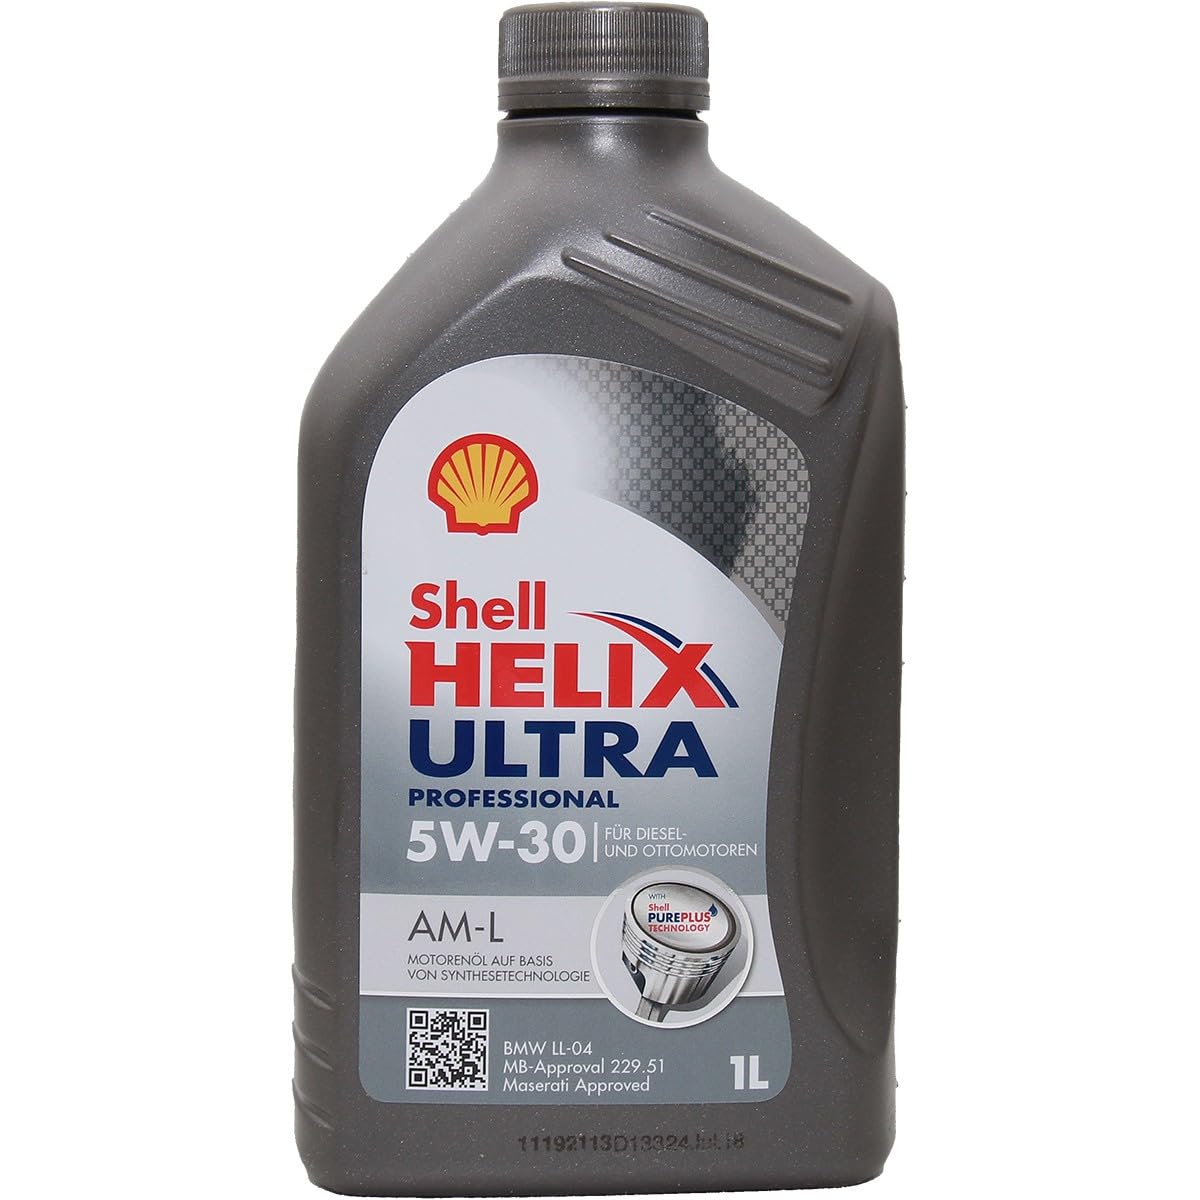 Shell Motoröl Helix Ultra Professional Am-Ll 5W-30 Motor Engine Oil 1L von Shell